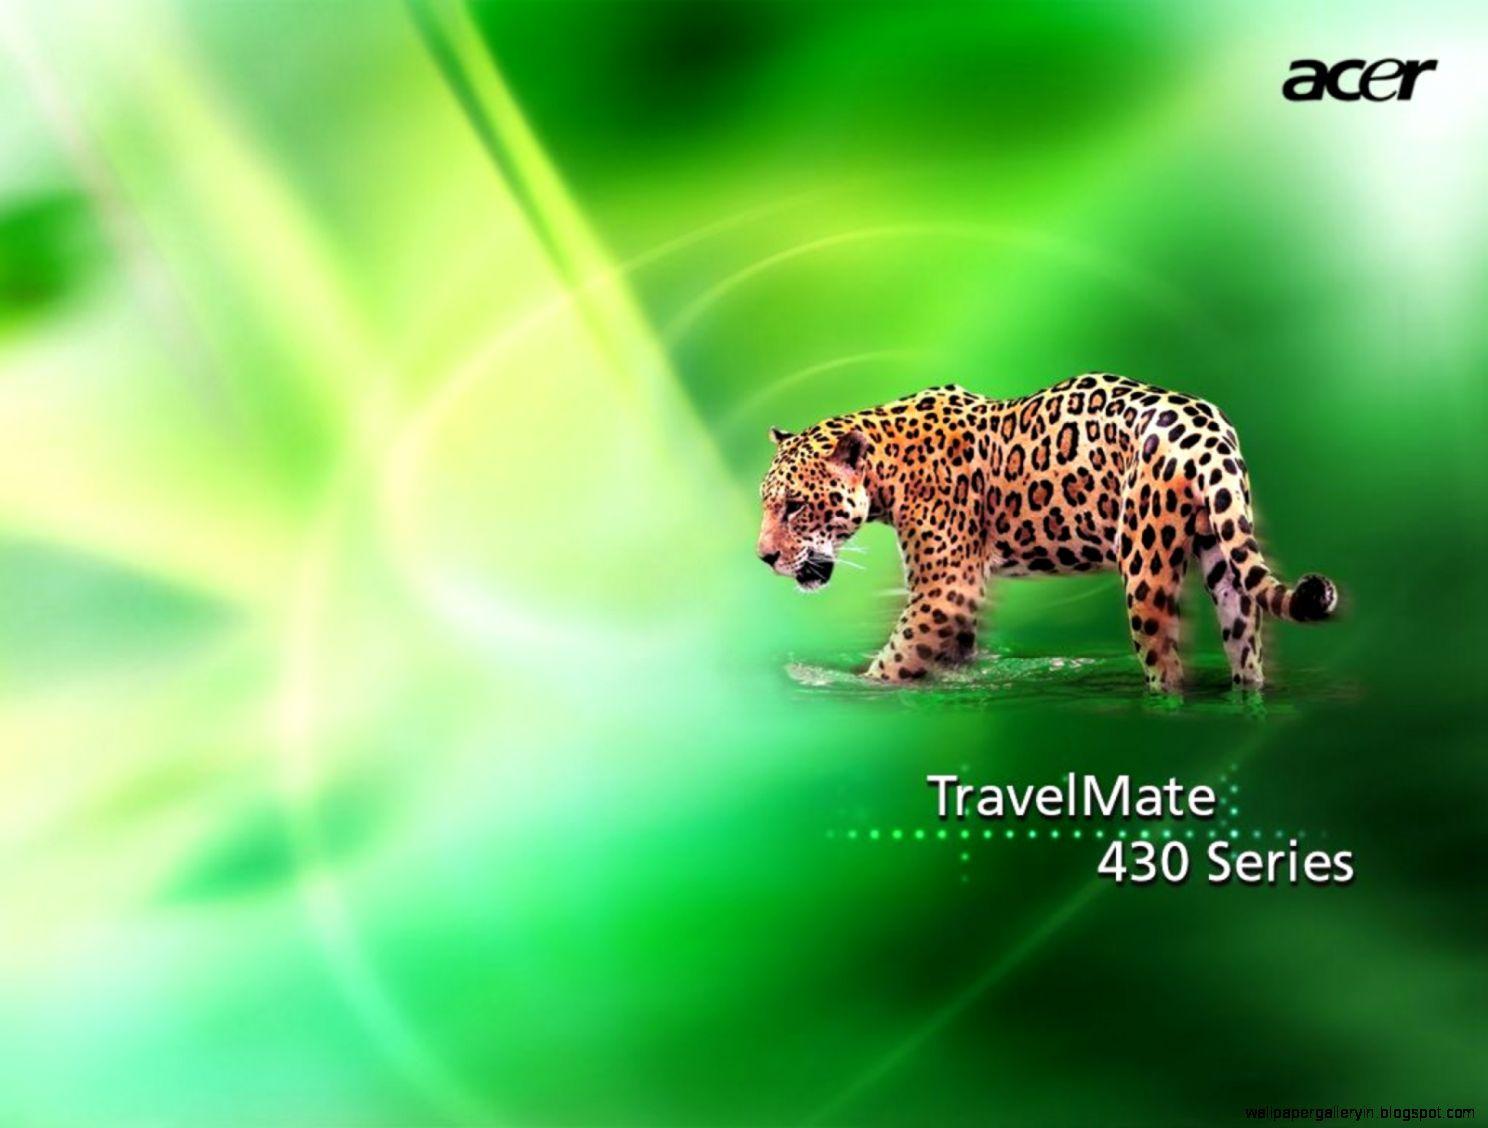 Acer Travelmate 430 Series Wallpaper Desktop